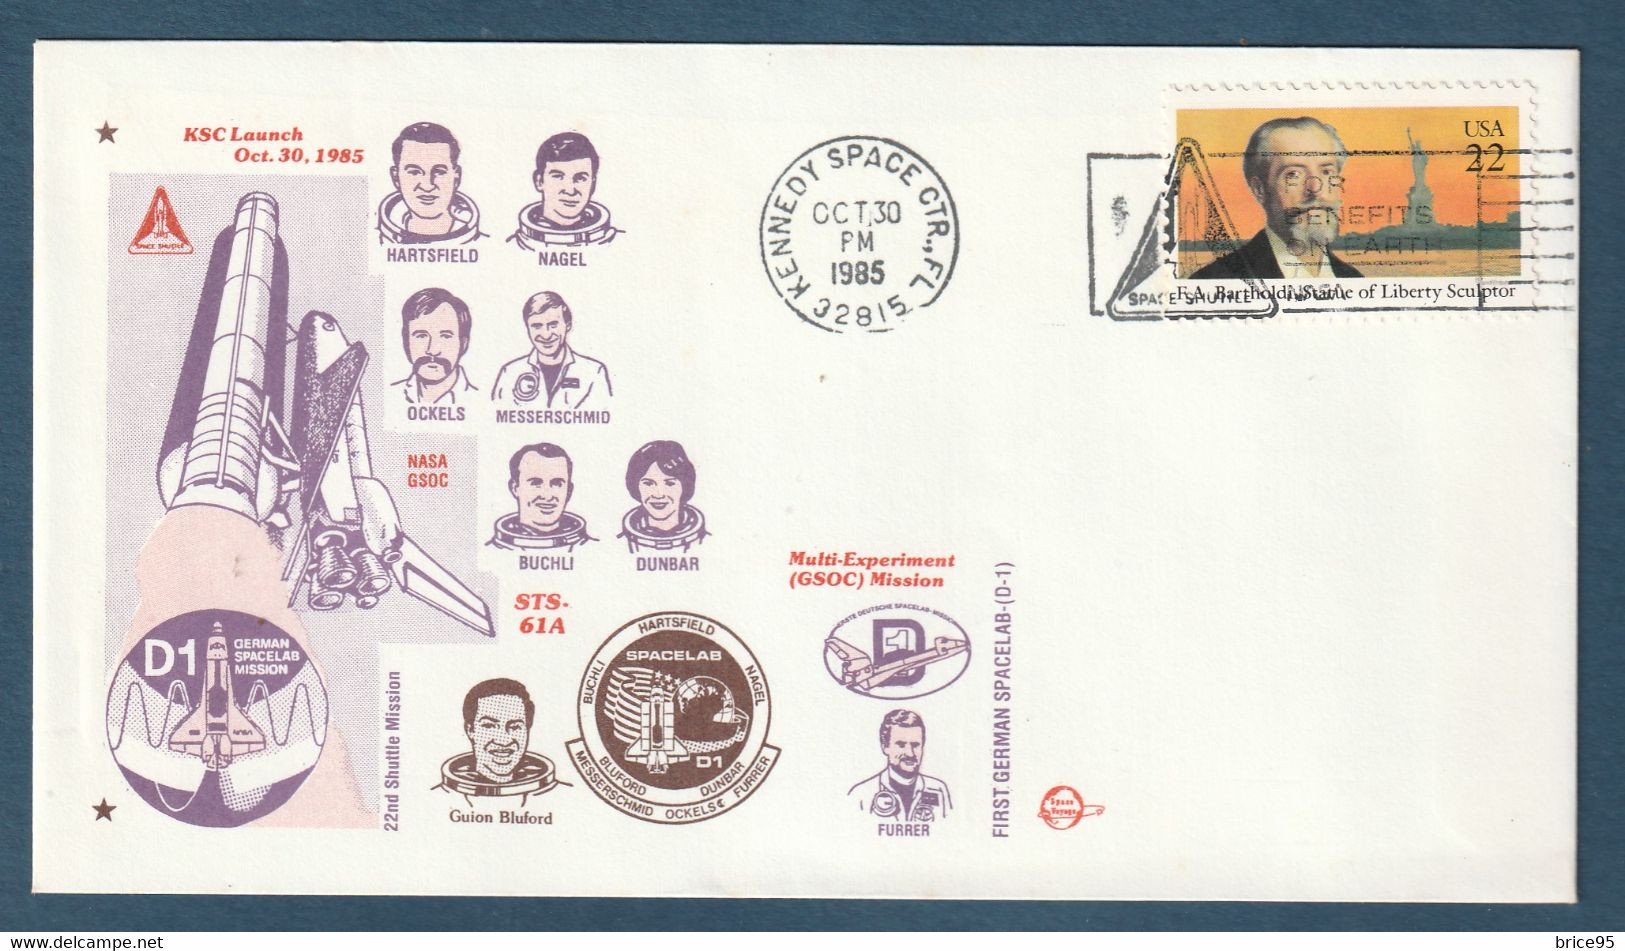 ✈️ Etats Unis - First German - Spacelab - D 1 - Multi Experiment Mission - GSOC - Houston - 1985 ✈️ - Nordamerika